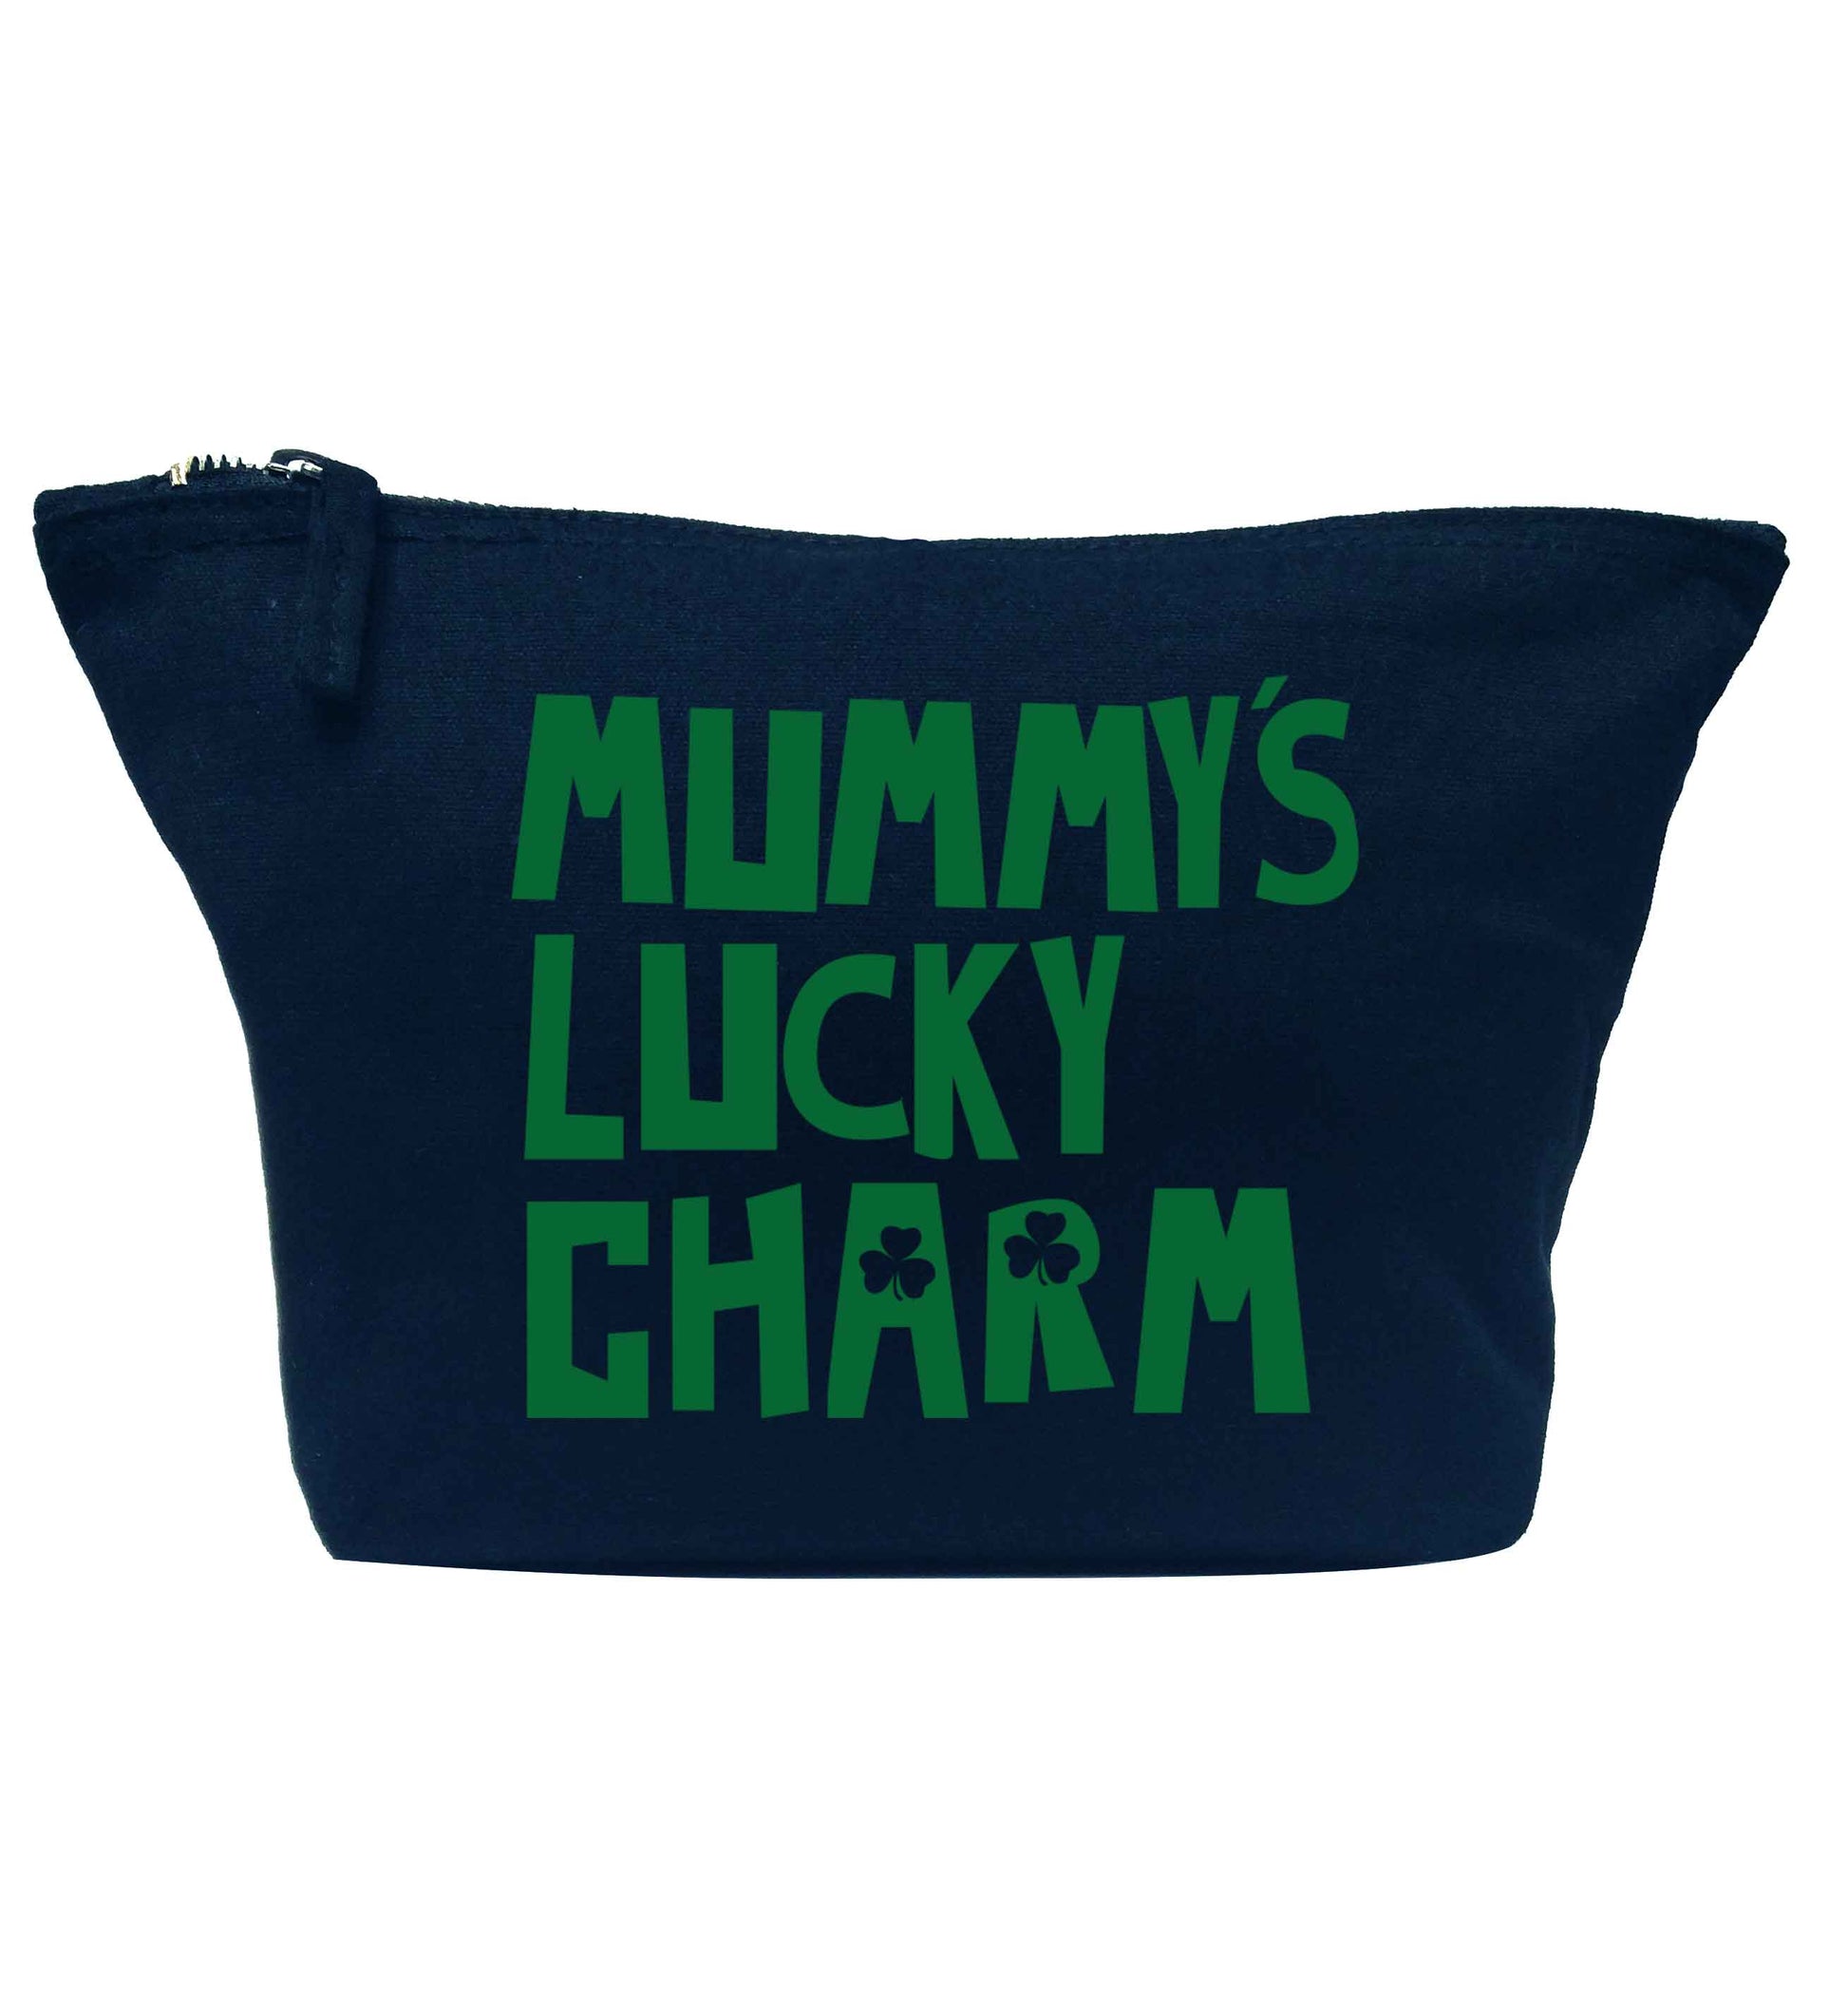 Mummy's lucky charm navy makeup bag